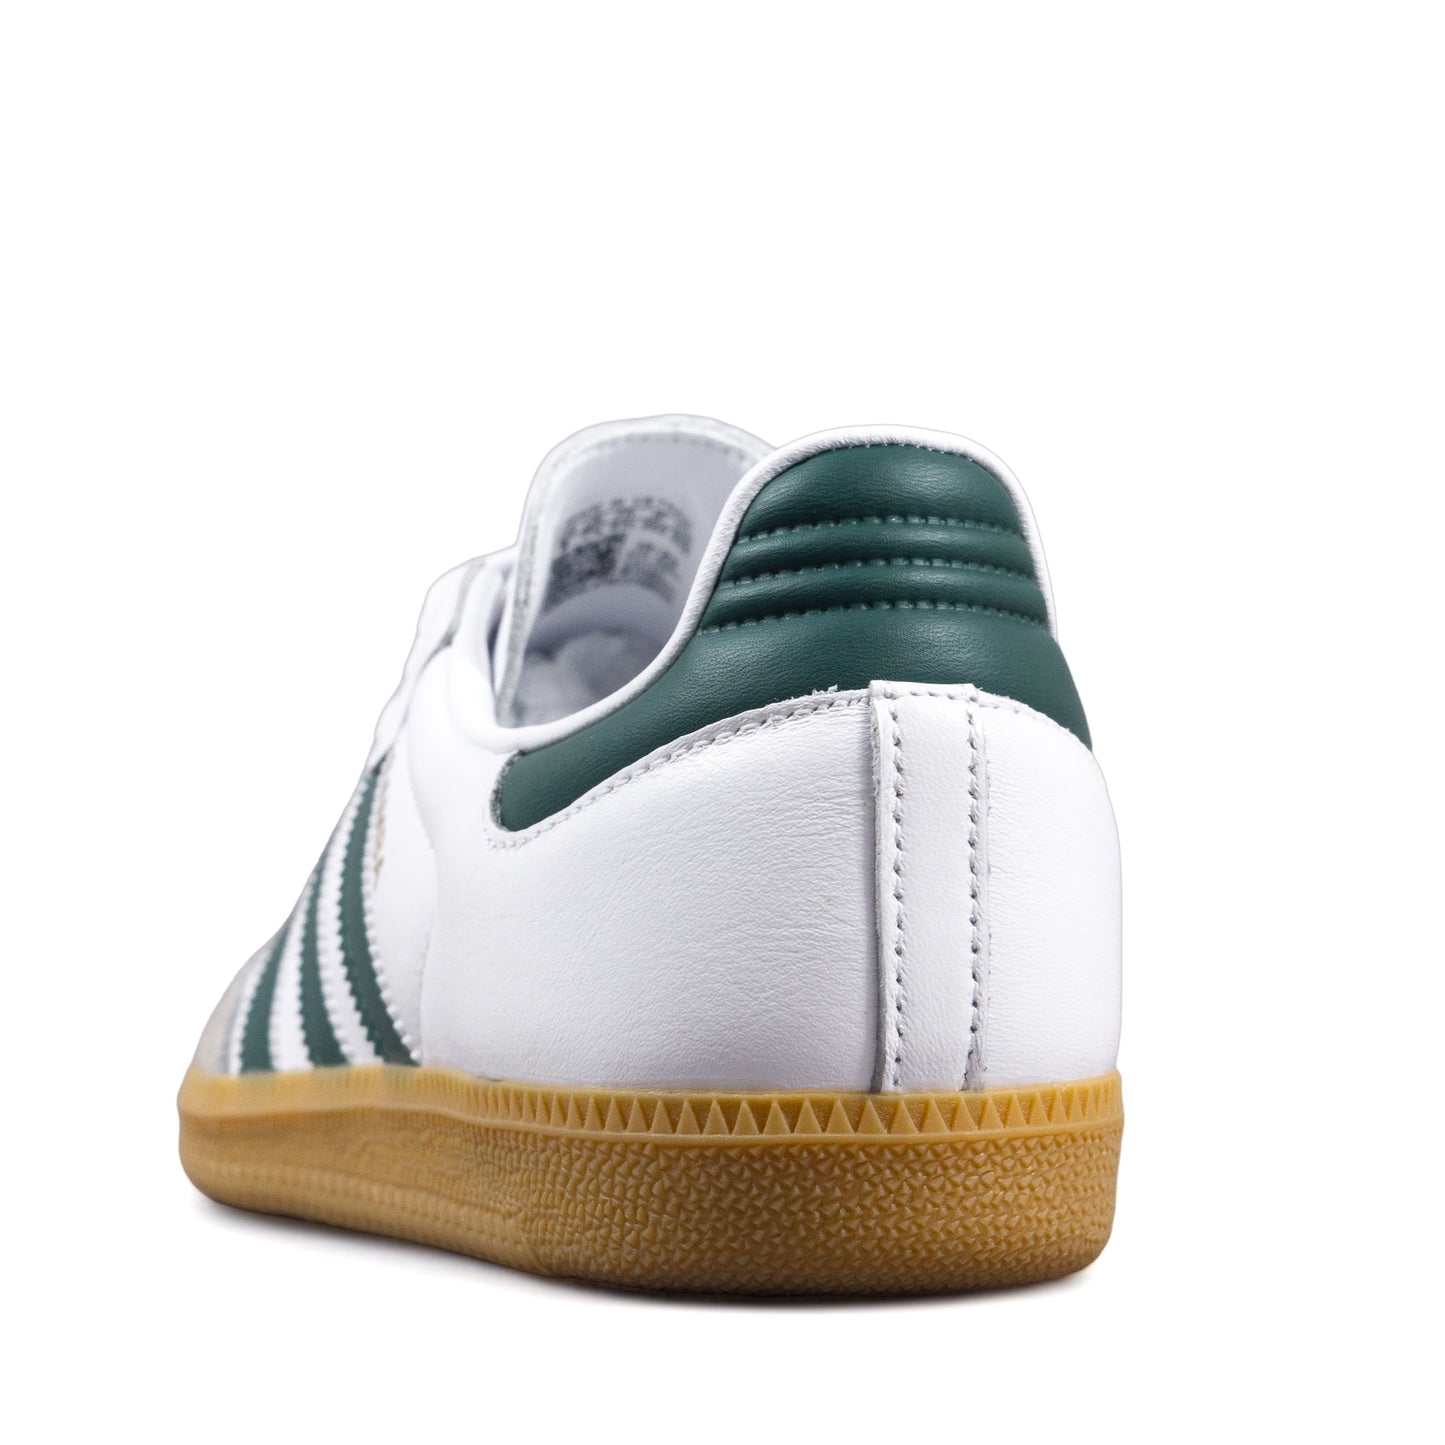 adidas-samba-og-footwear-white-collegiate-green-gum